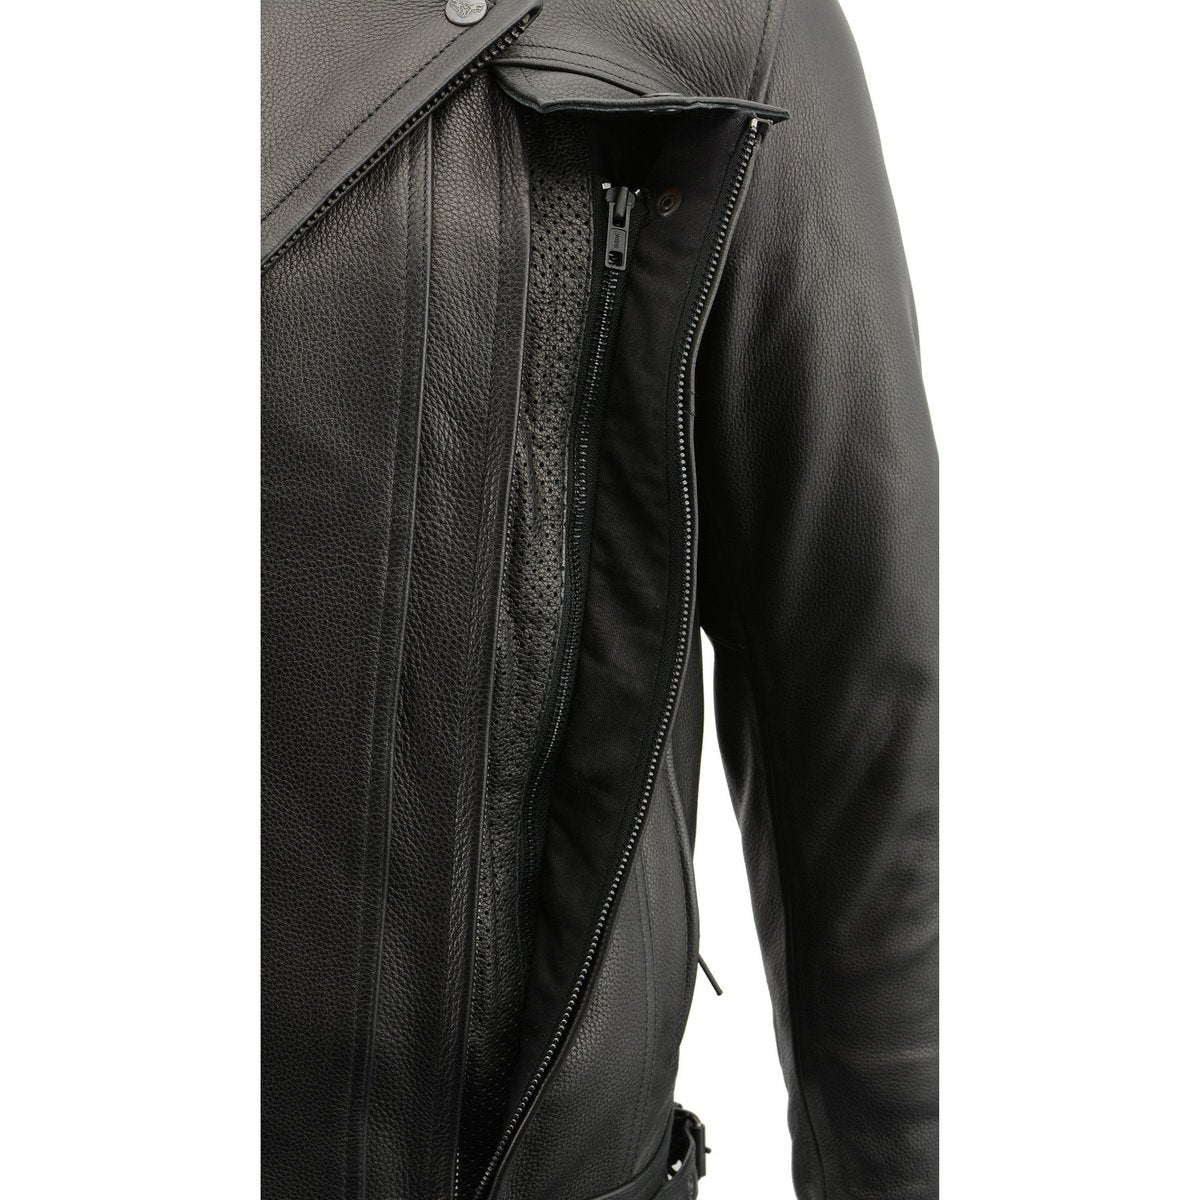 Milwaukee Leather LKM1760 Men's Black Leather Jacket with Utility Pockets